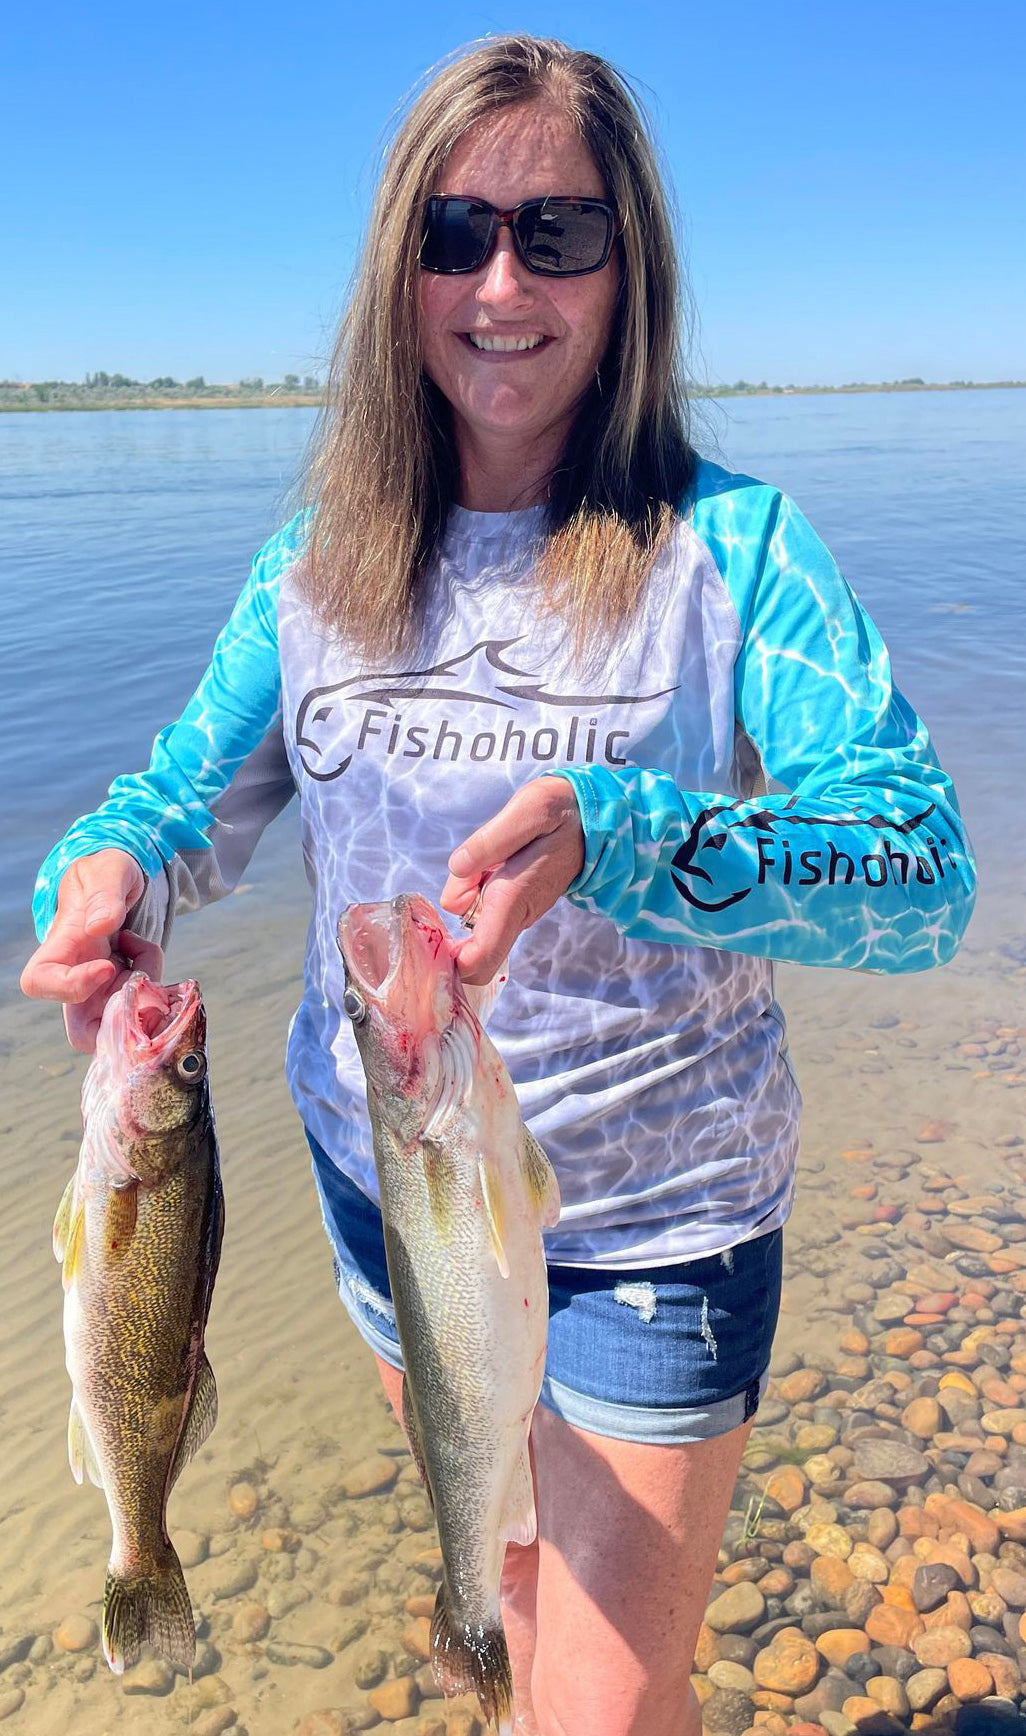 Fishoholic Performance Fishing Shirt - UPF 50+ Long Sleeve - Loose